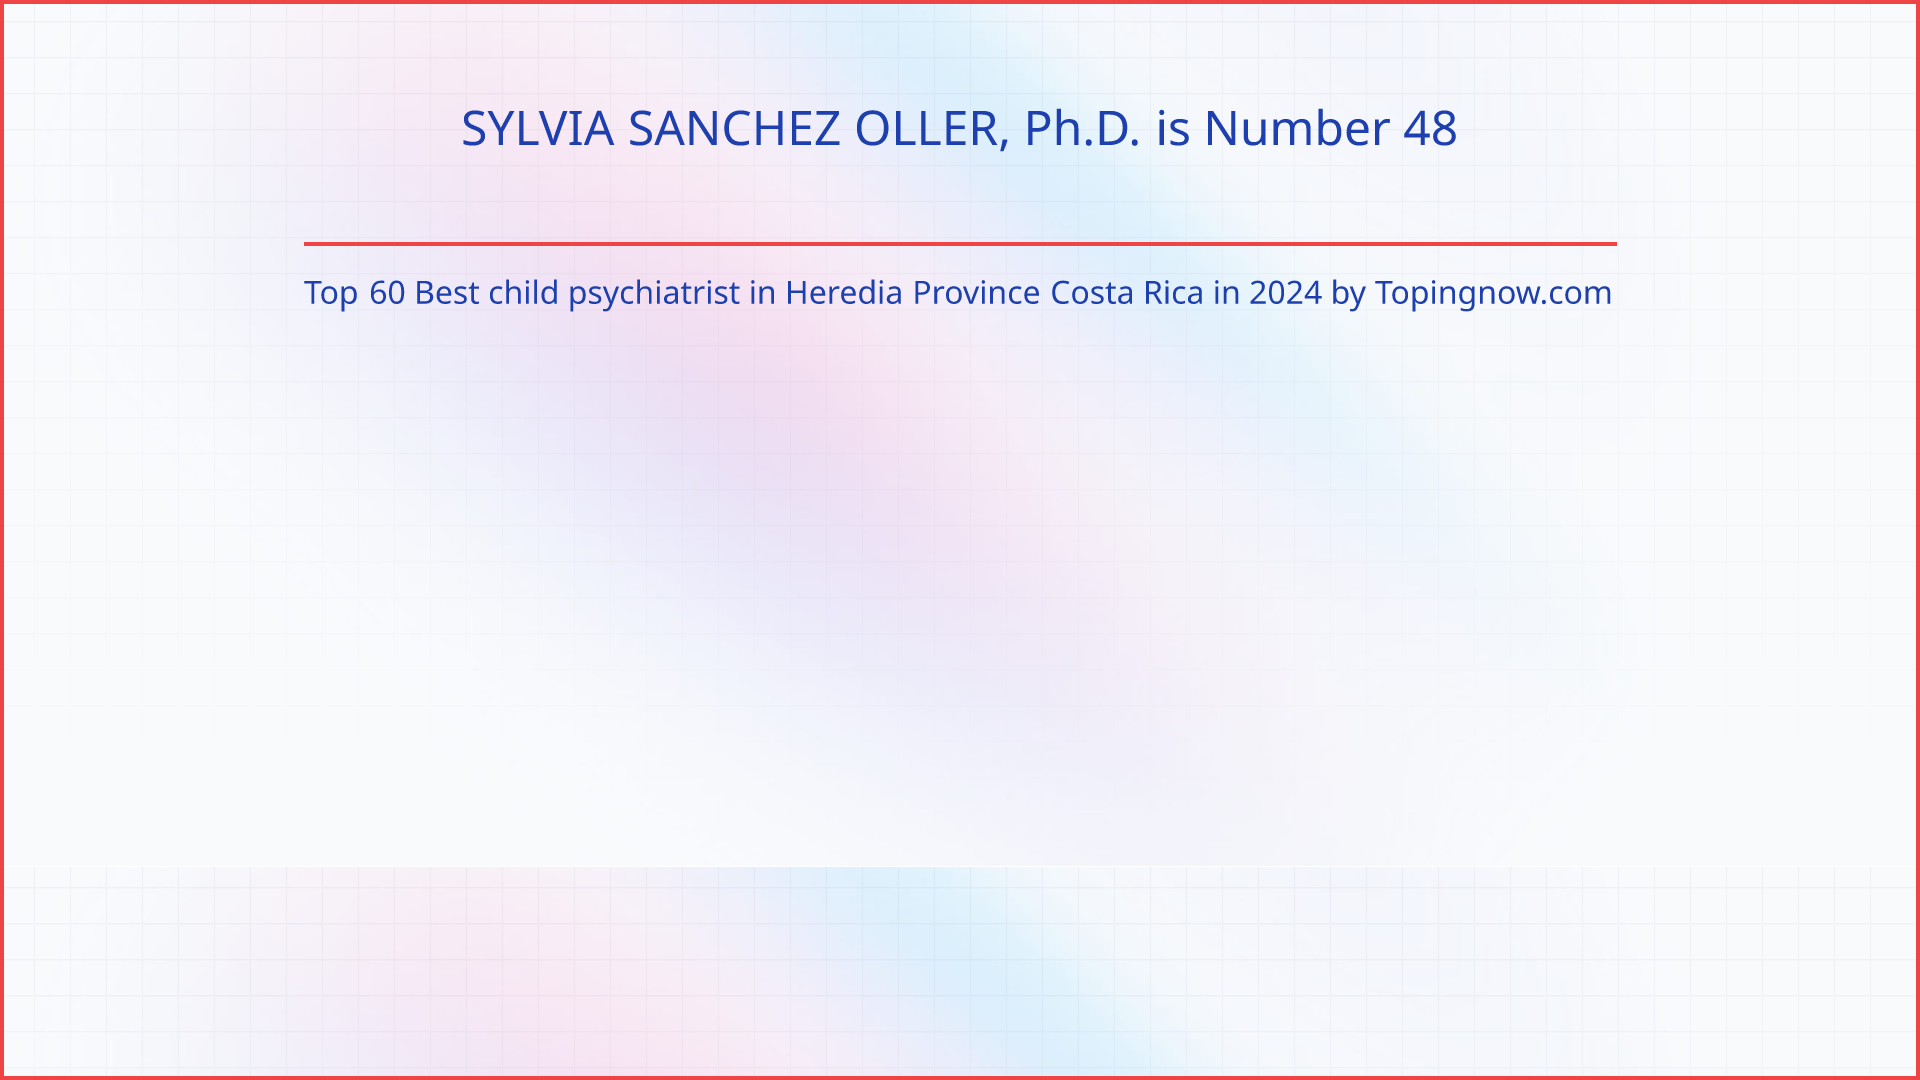 SYLVIA SANCHEZ OLLER, Ph.D.: Top 60 Best child psychiatrist in Heredia Province Costa Rica in 2024